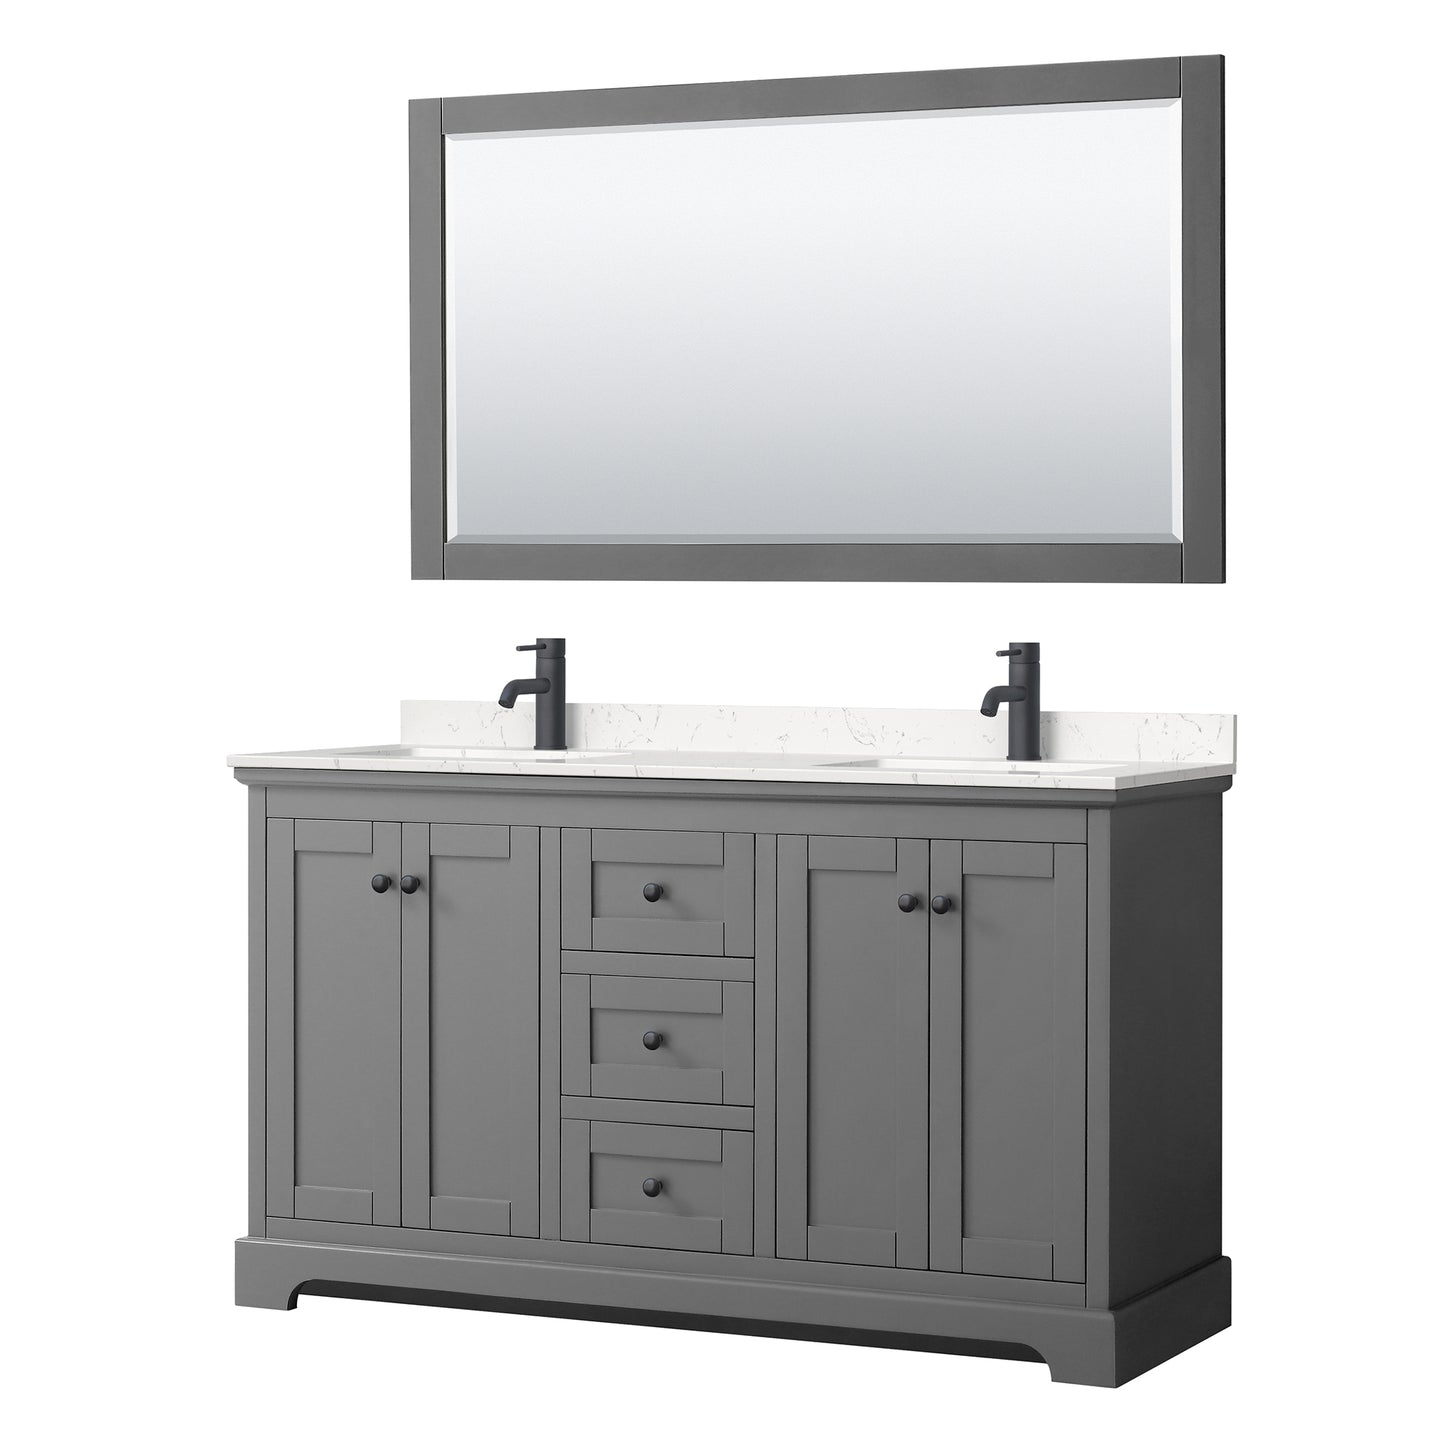 Wyndham Avery 60 Inch Double Bathroom Vanity Light-Vein Carrara Cultured Marble Countertop, Undermount Square Sinks in Matte Black Trim with 58 Inch Mirror - Luxe Bathroom Vanities